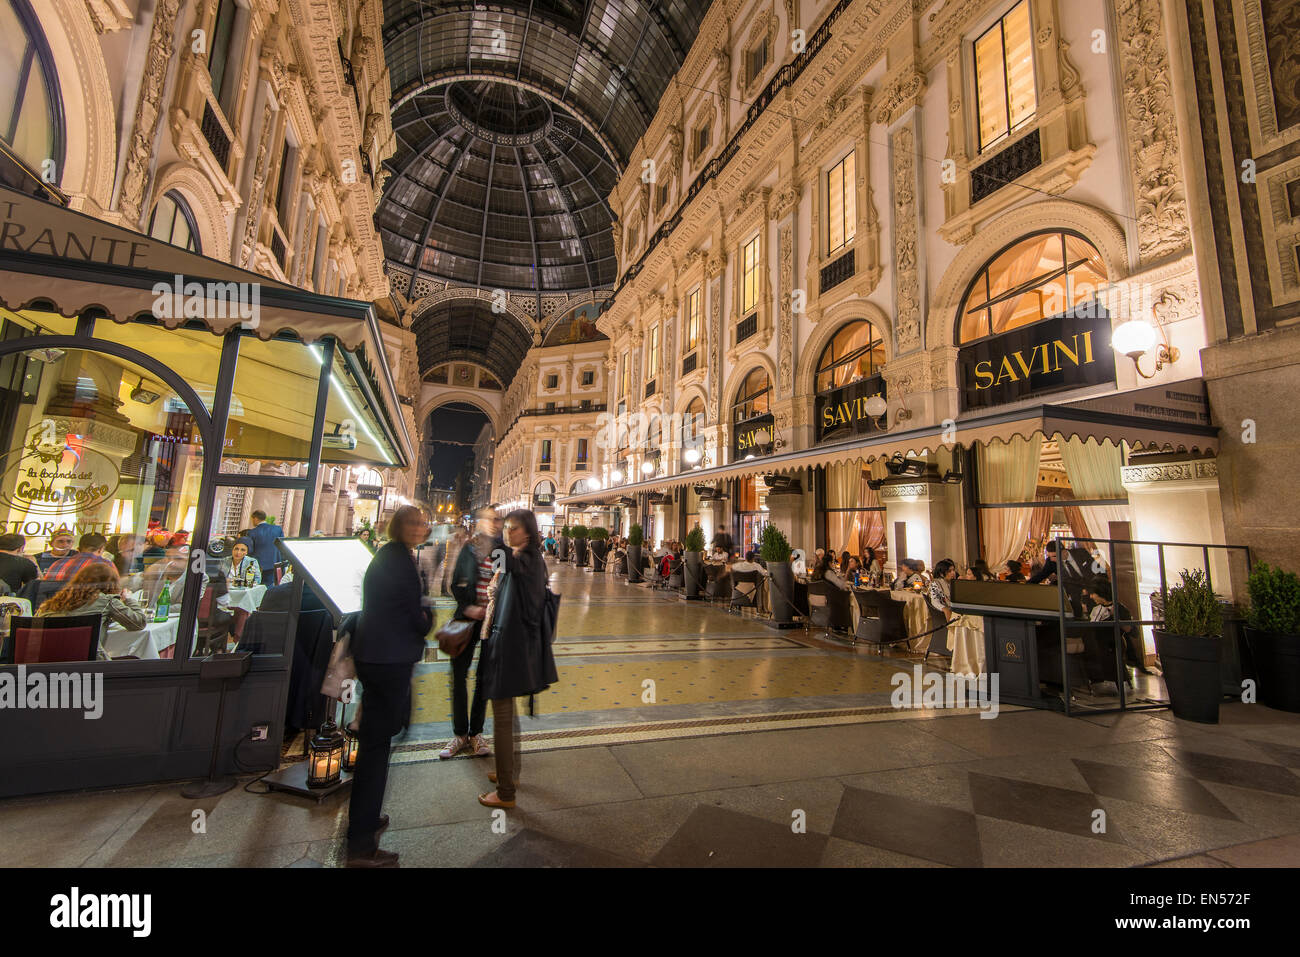 Savini Restaurant located inside the beautiful Galleria Vittorio Emanuele II gallery, Milan, Lombardy, Italy Stock Photo